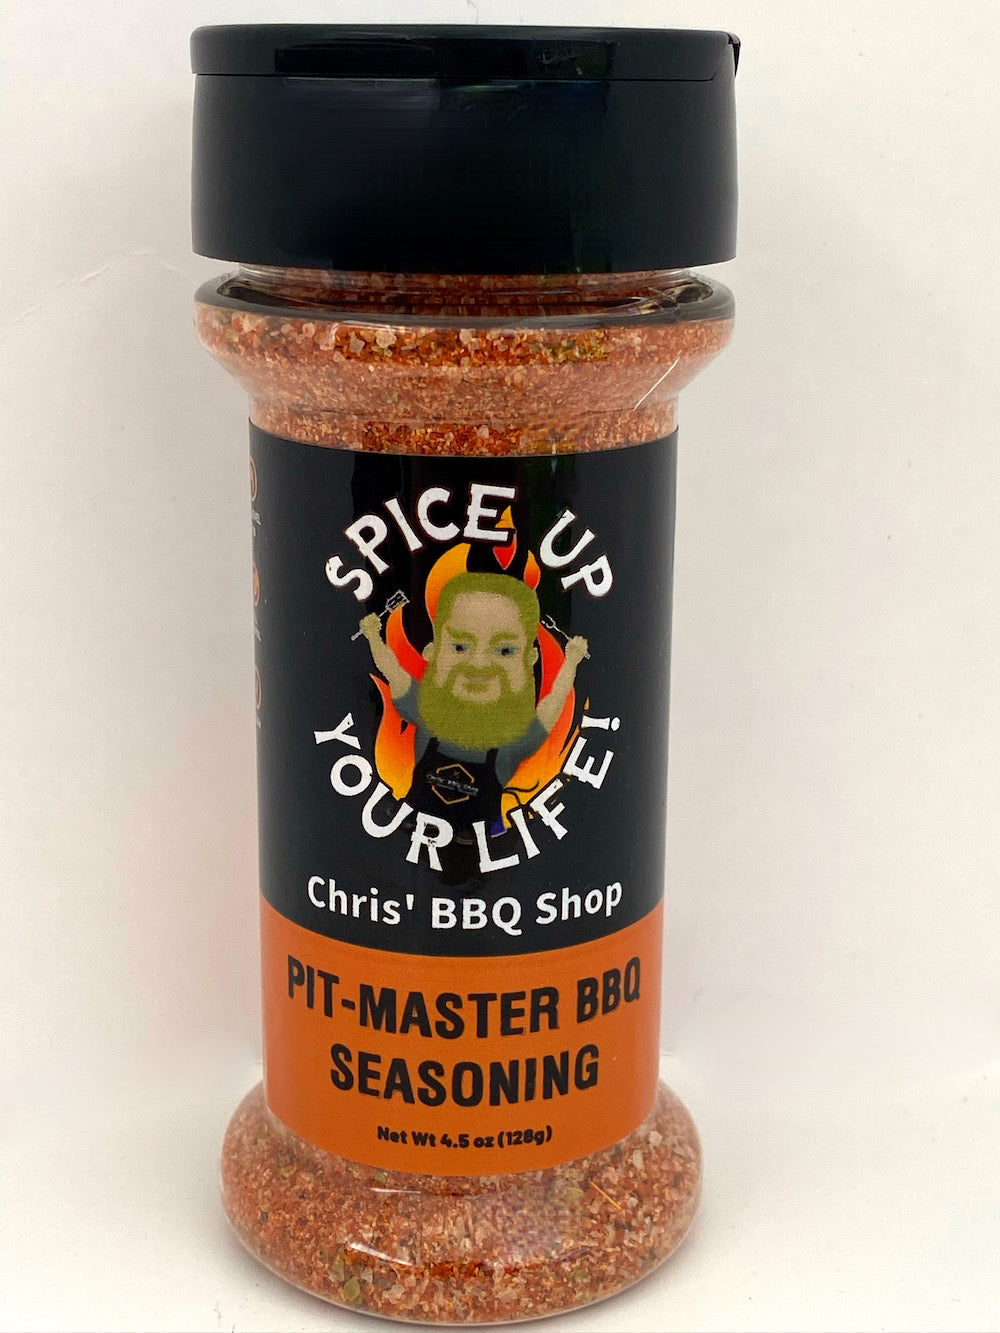 Chris BBQ Shop Seasoning Pit-Master BBQ Seasoning Blend (7oz.)